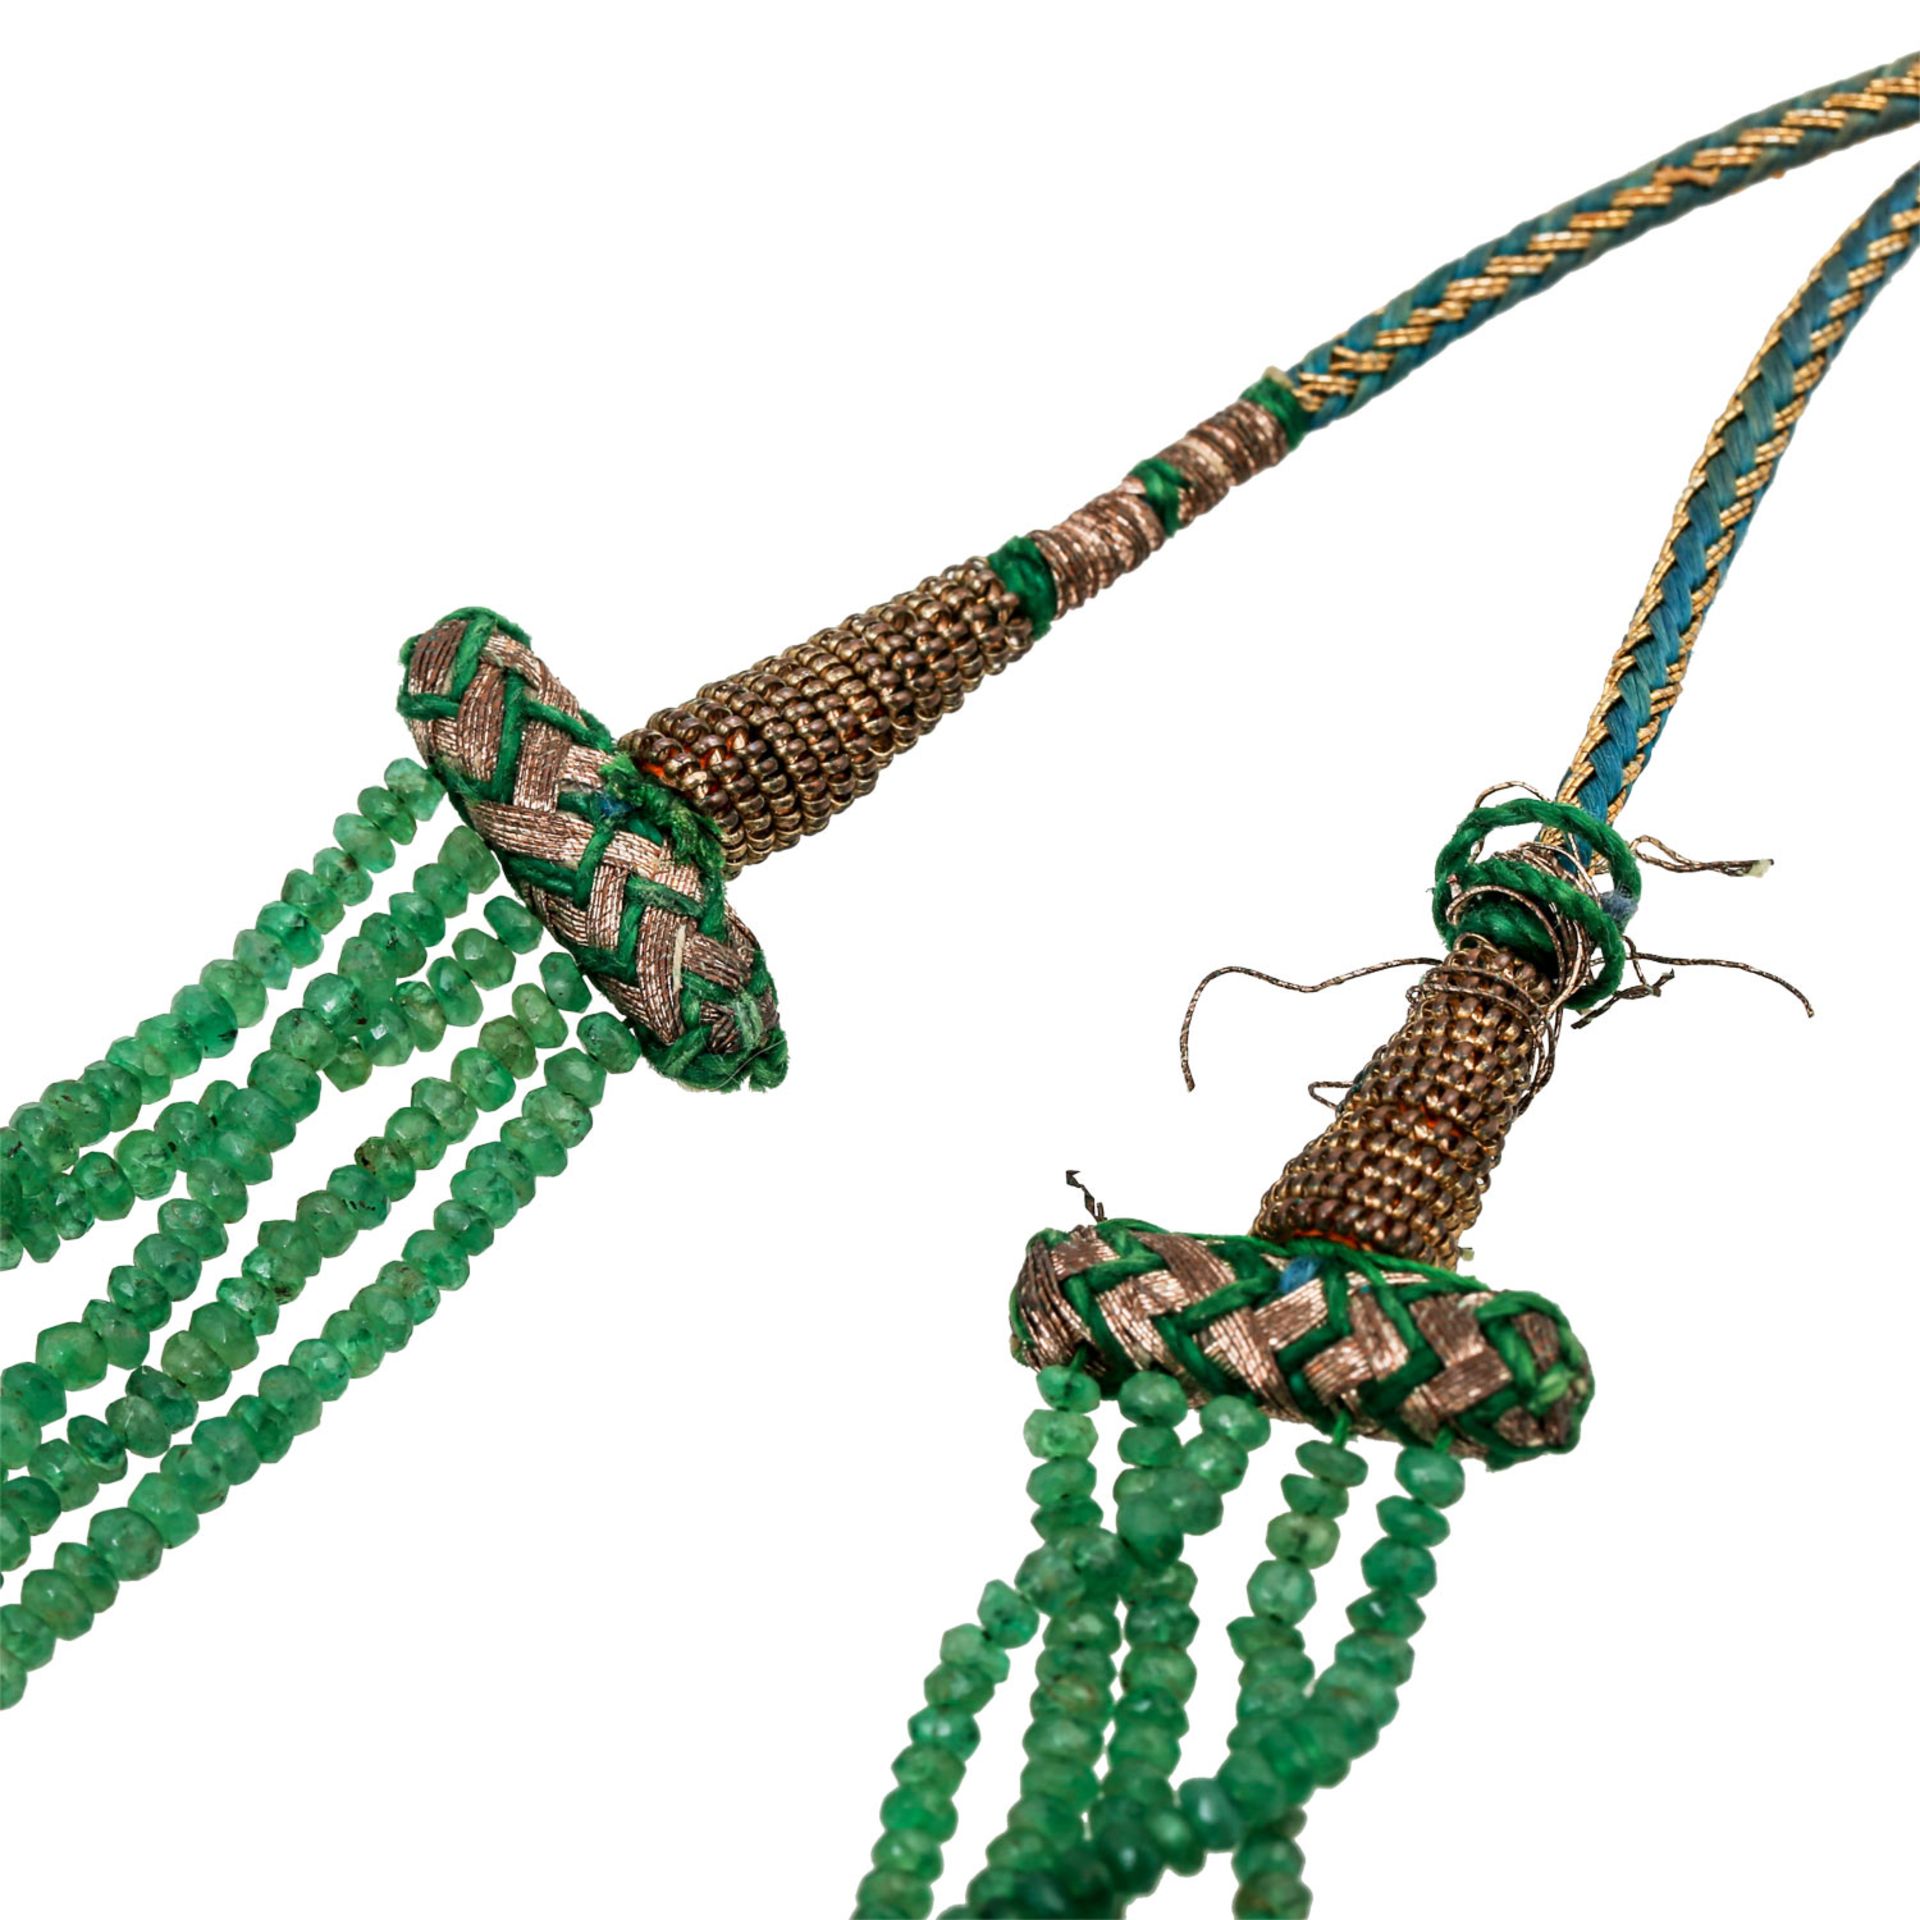 5-reihige Smaragdkette, facettierte Linsen ca. 2,5-6 mm im Verlauf, tansparent bis tra - Image 4 of 5